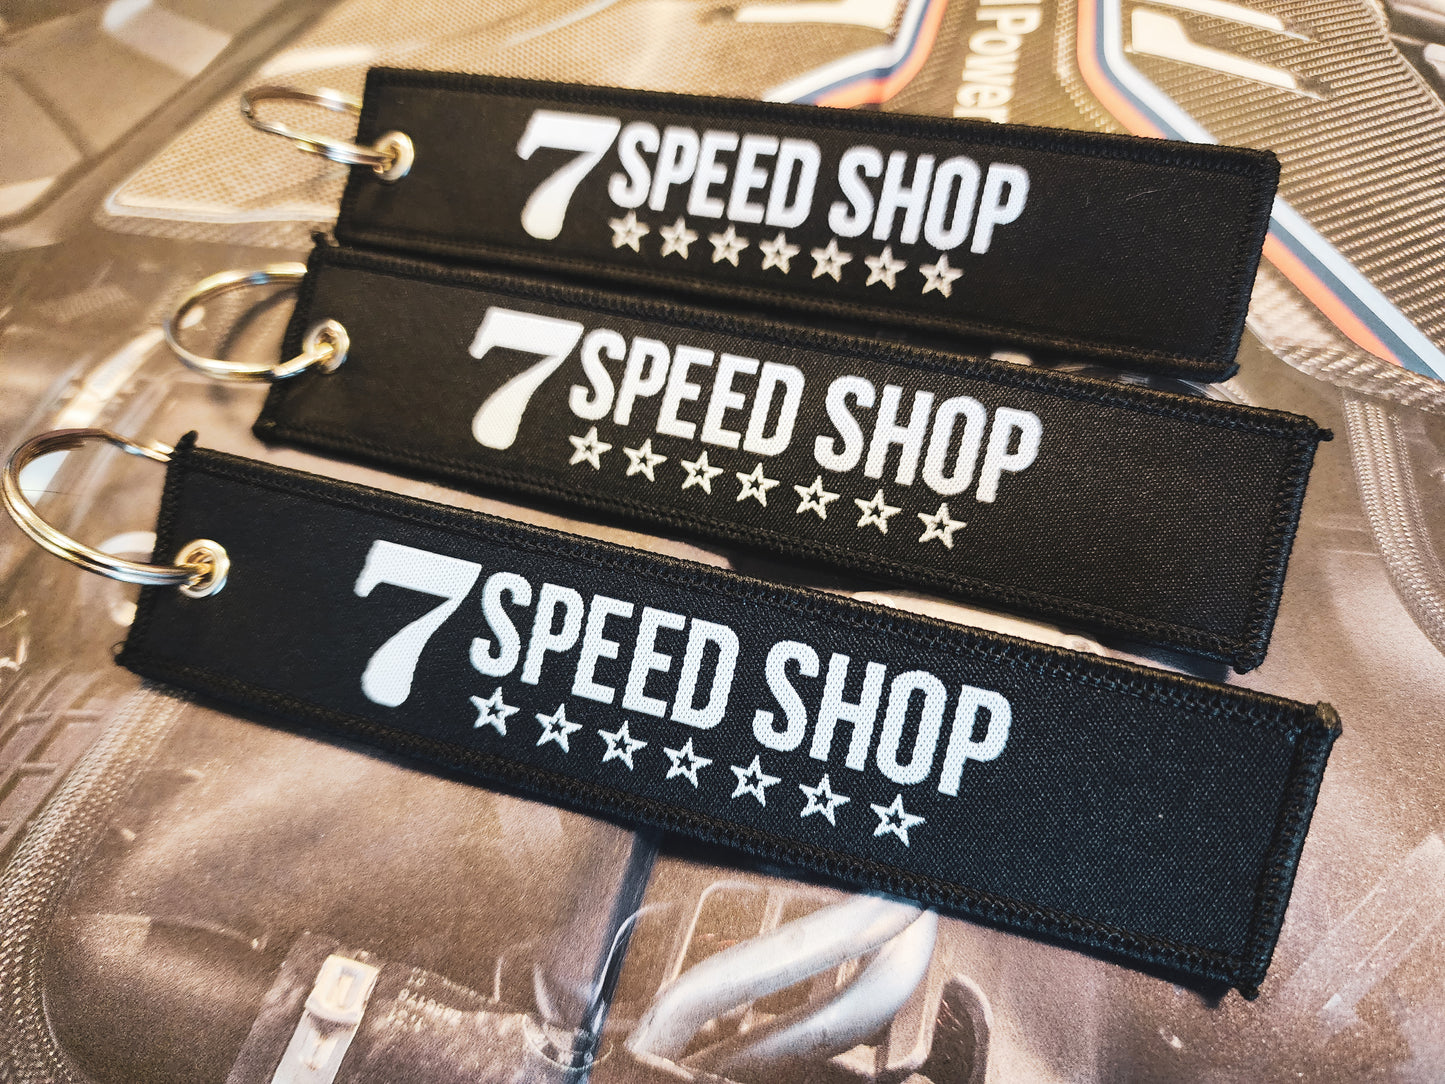 7 speed shop cloth key chain tag